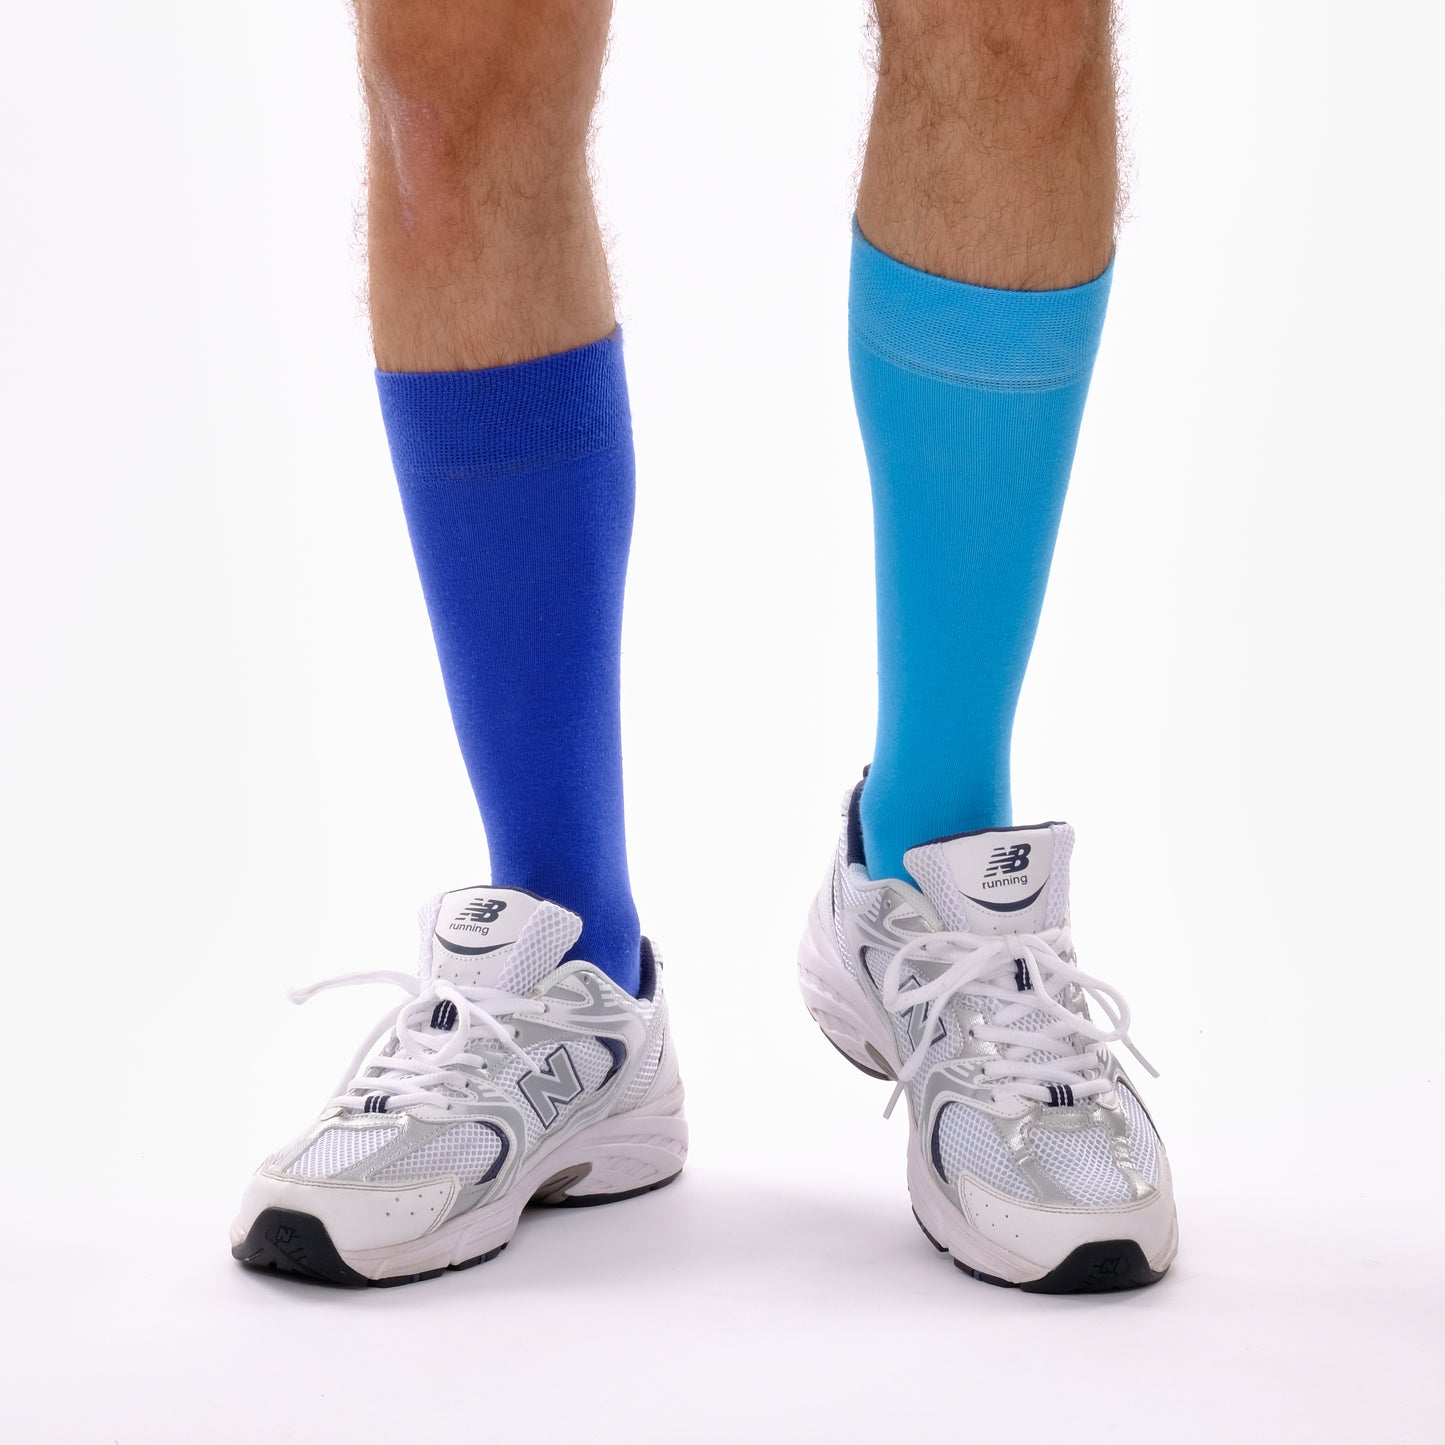 University Blue & Royal Blue Odd Socks